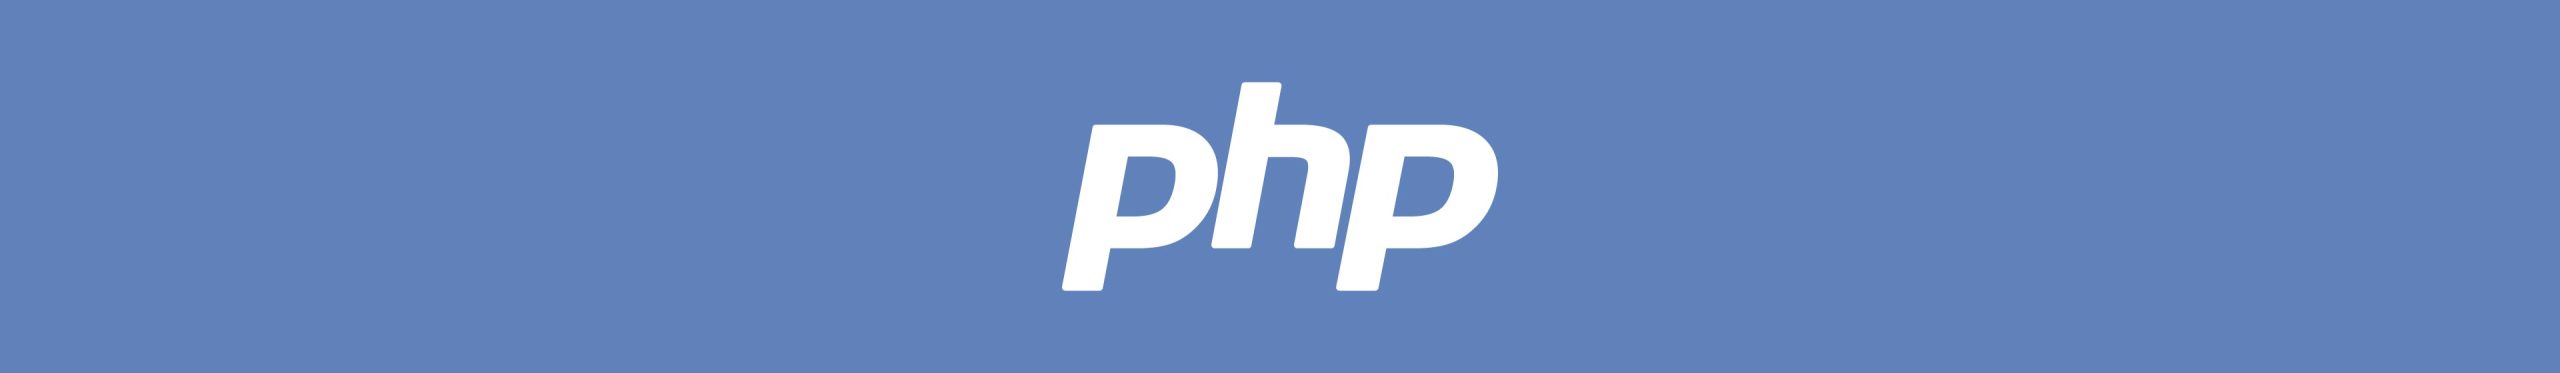 Banner_PHP Hosting-01